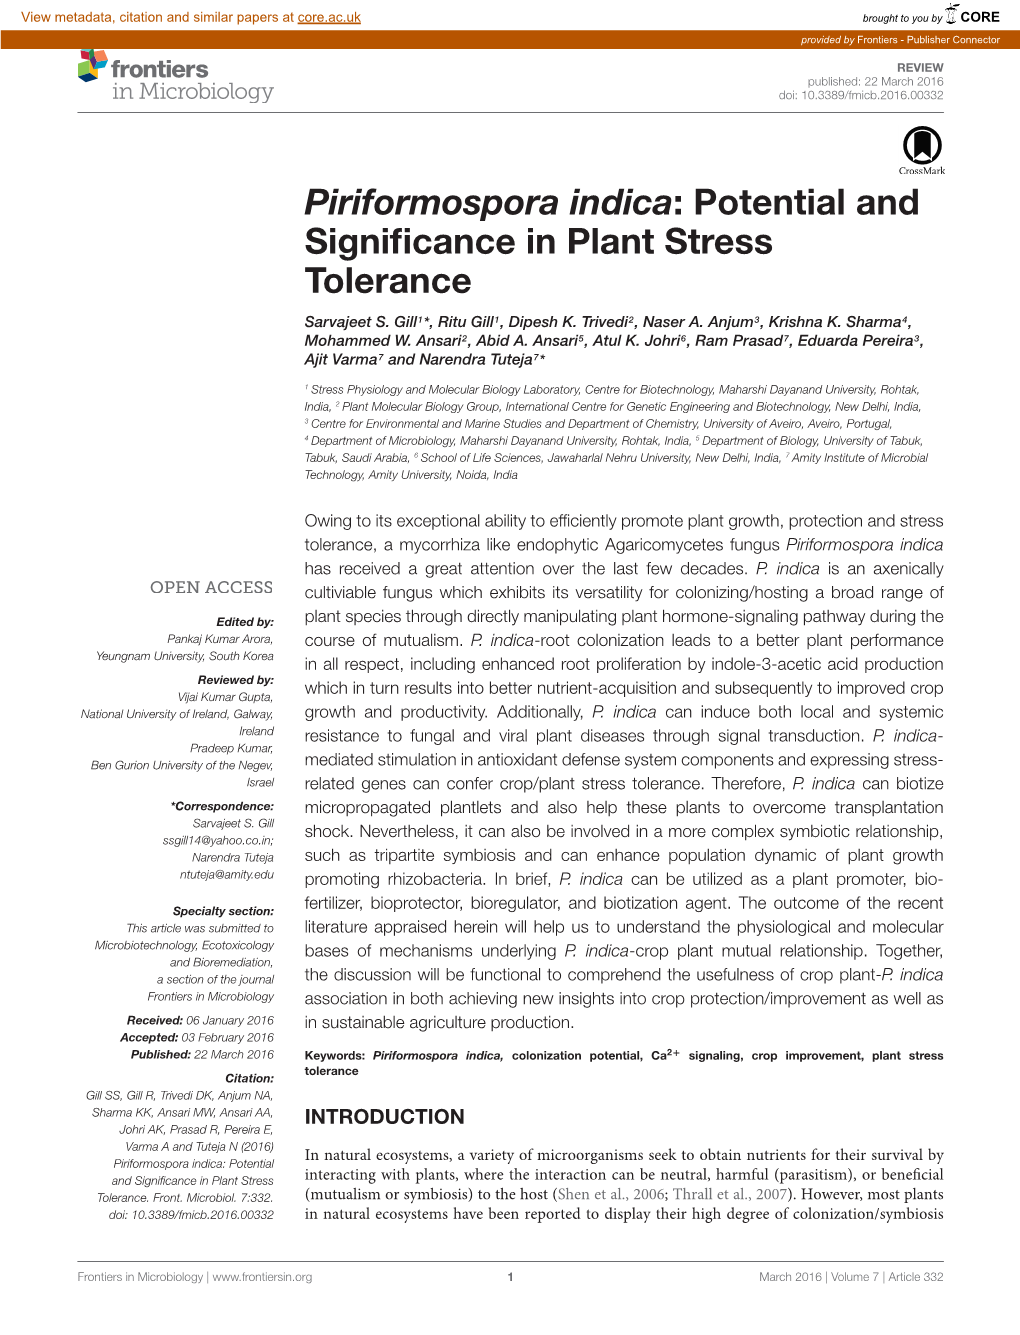 Piriformospora Indica: Potential and Significance in Plant Stress Tolerance